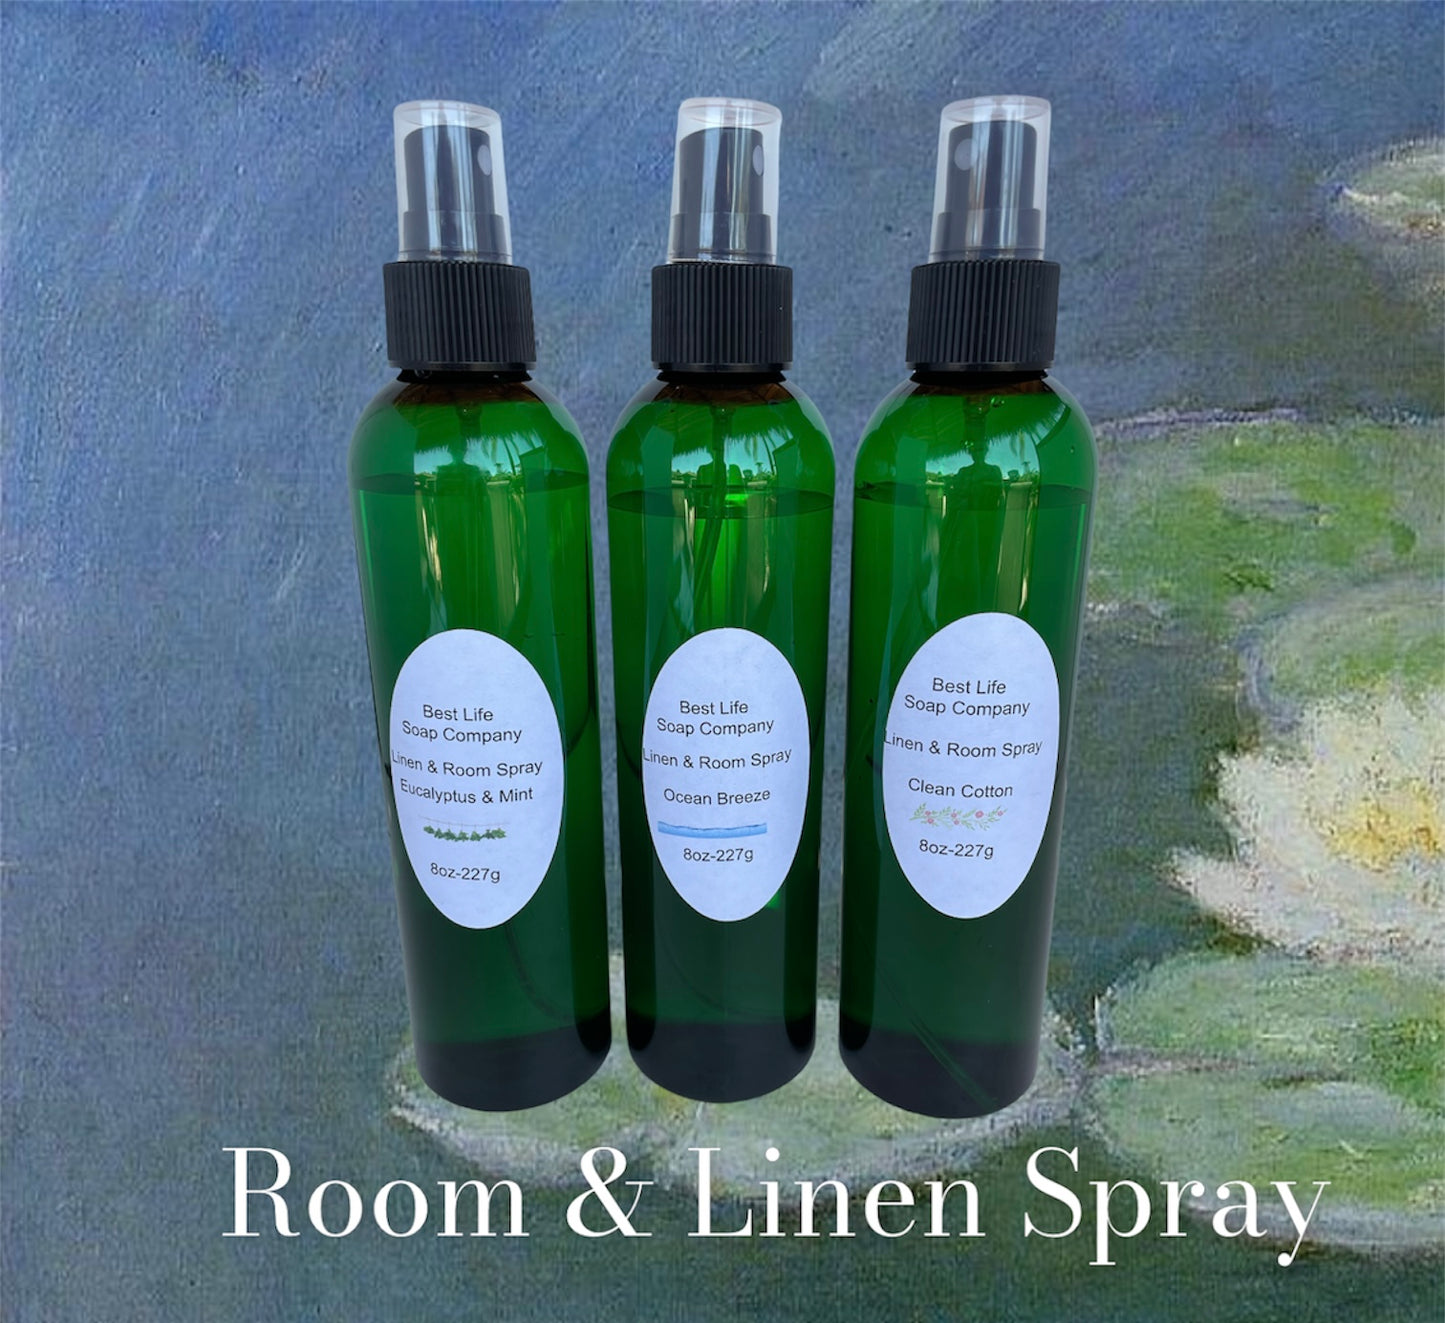 Clean Cotton Linen & Room Spray